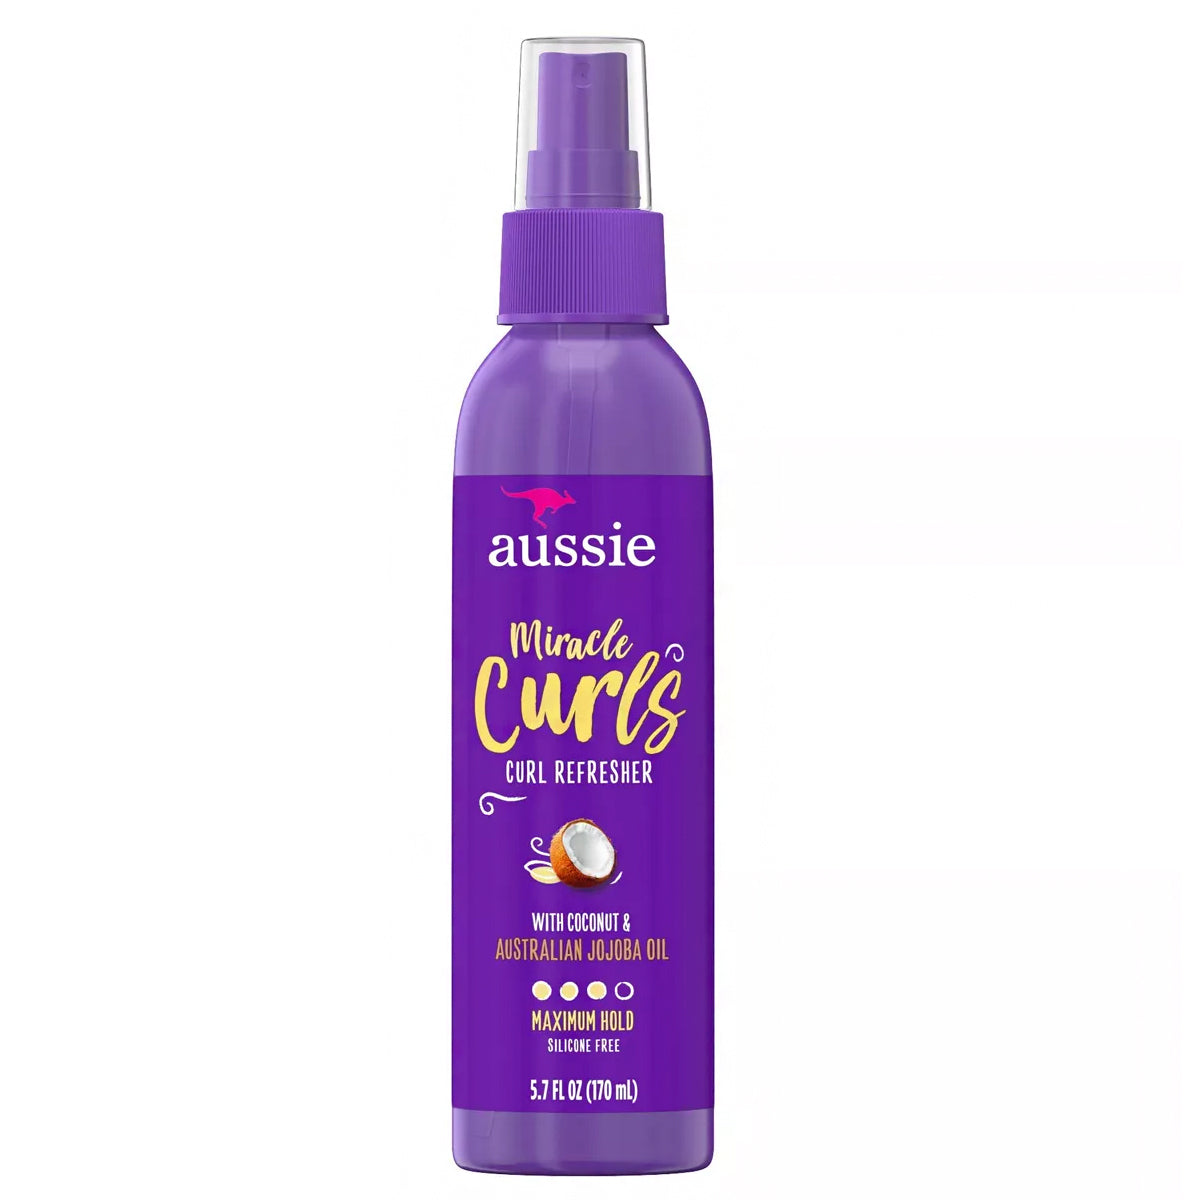 Aussie Miracle Curls Curl Refresher 5.7oz